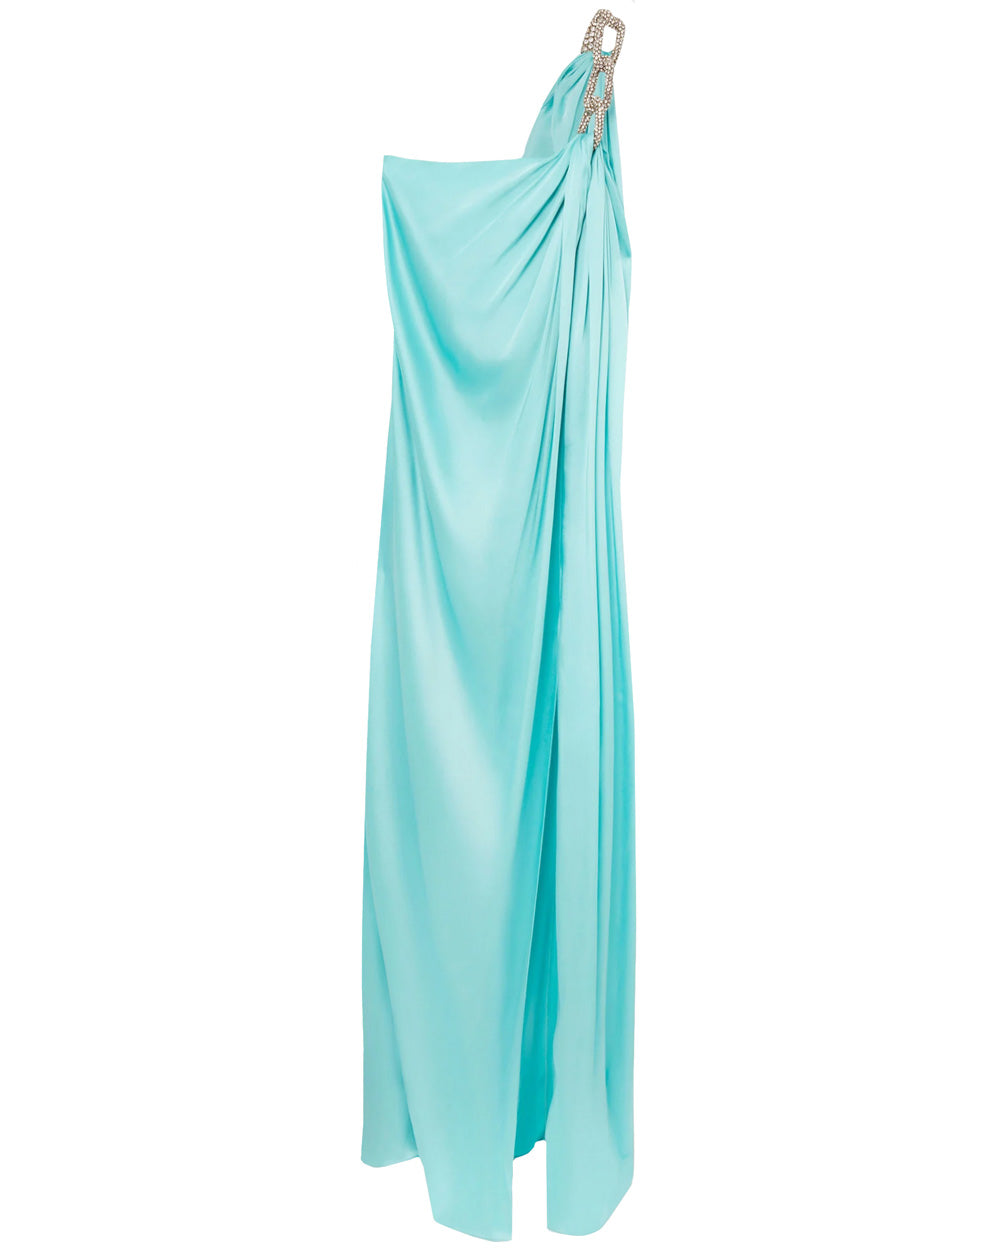 One of my favorite Oscar gowns~ Gwyneth Paltrow in pale pink Stella  McCartney. | Best oscar dresses, Oscar dresses, Red carpet fashion